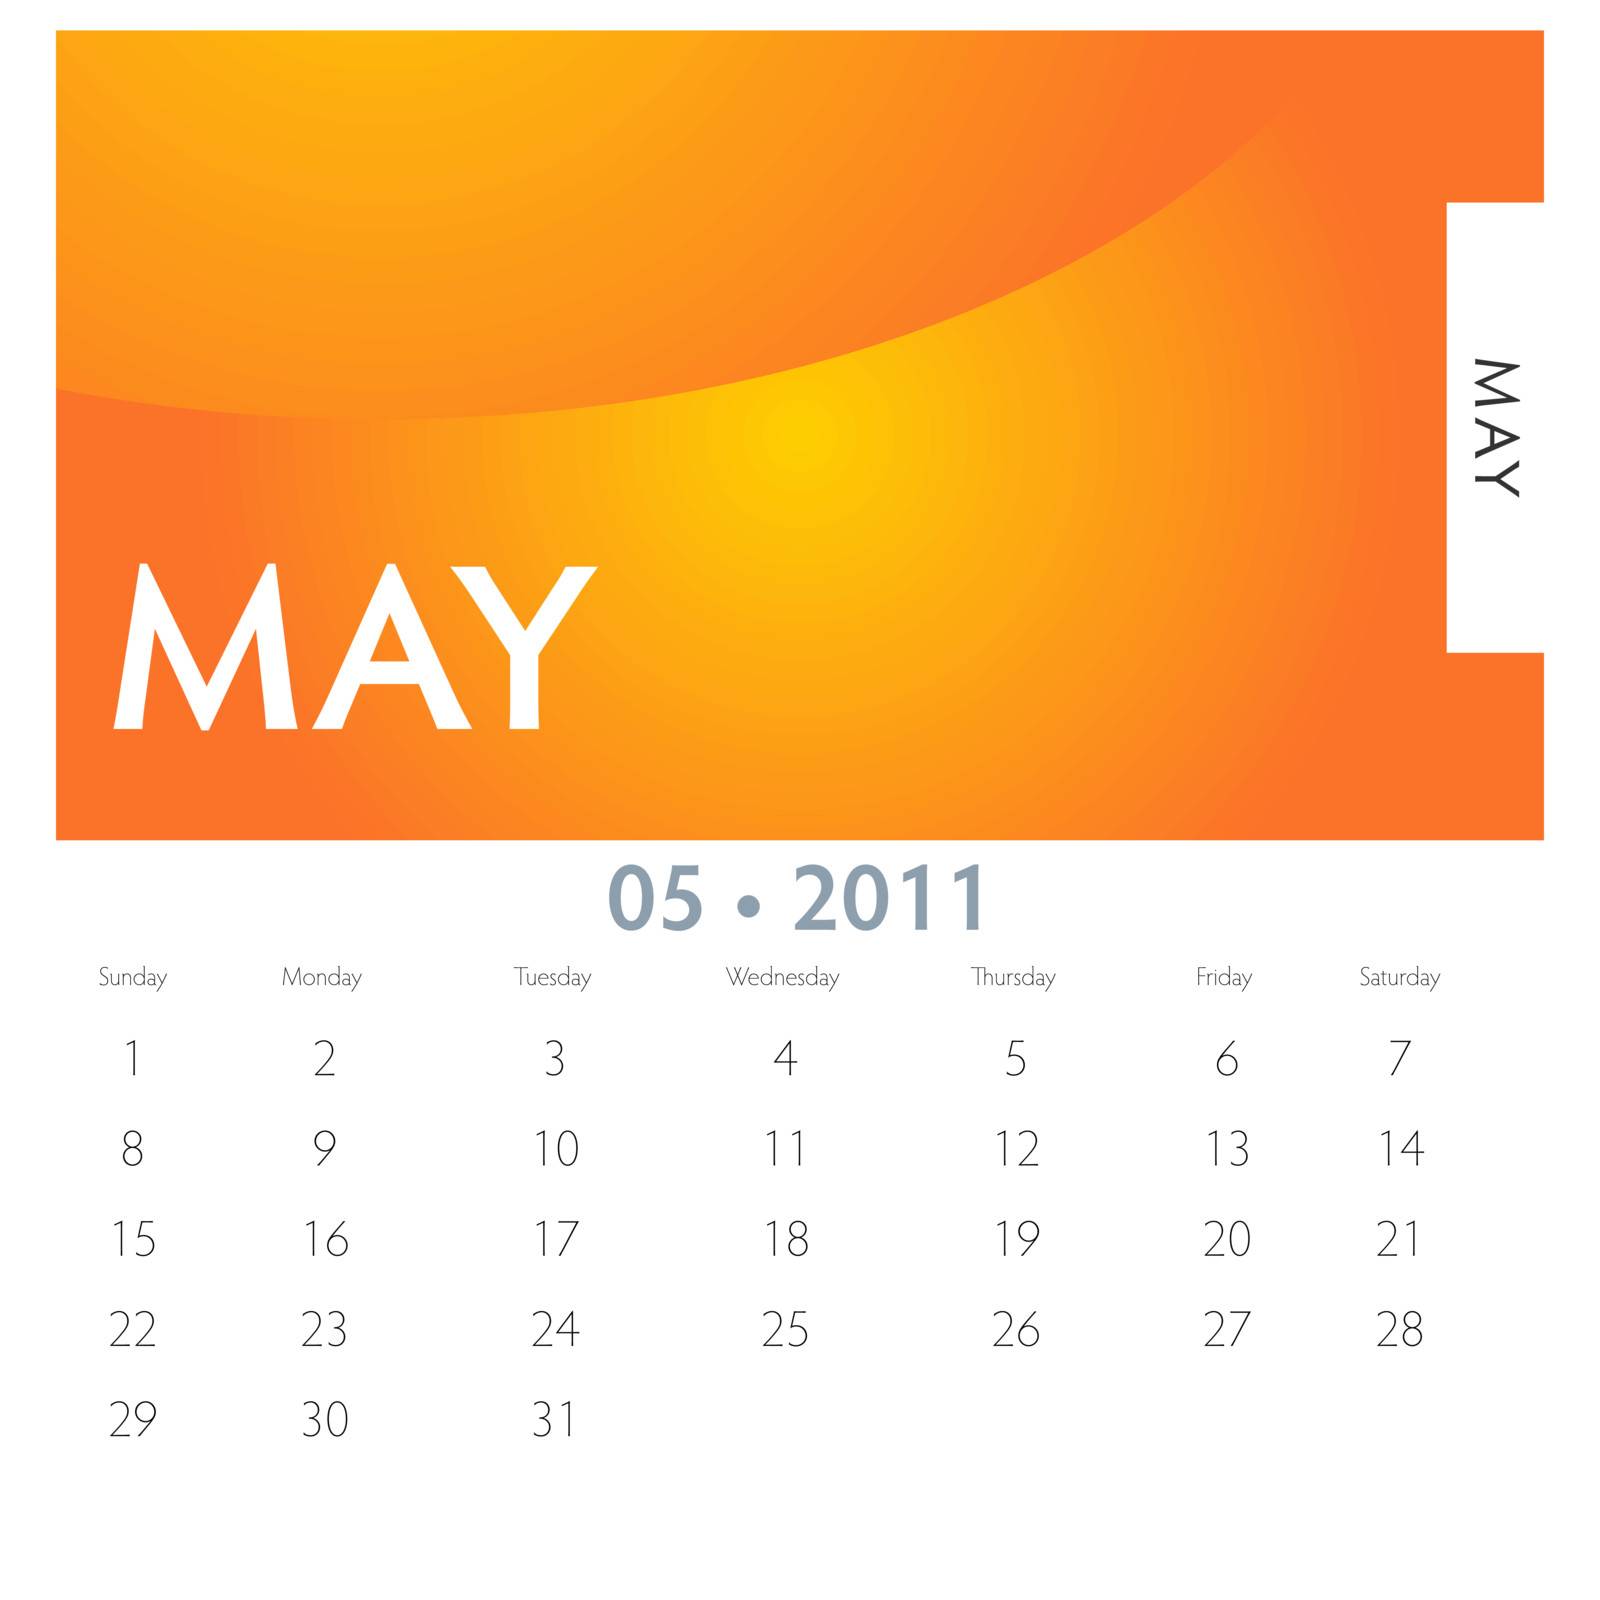 An image of a 2011 May calendar.